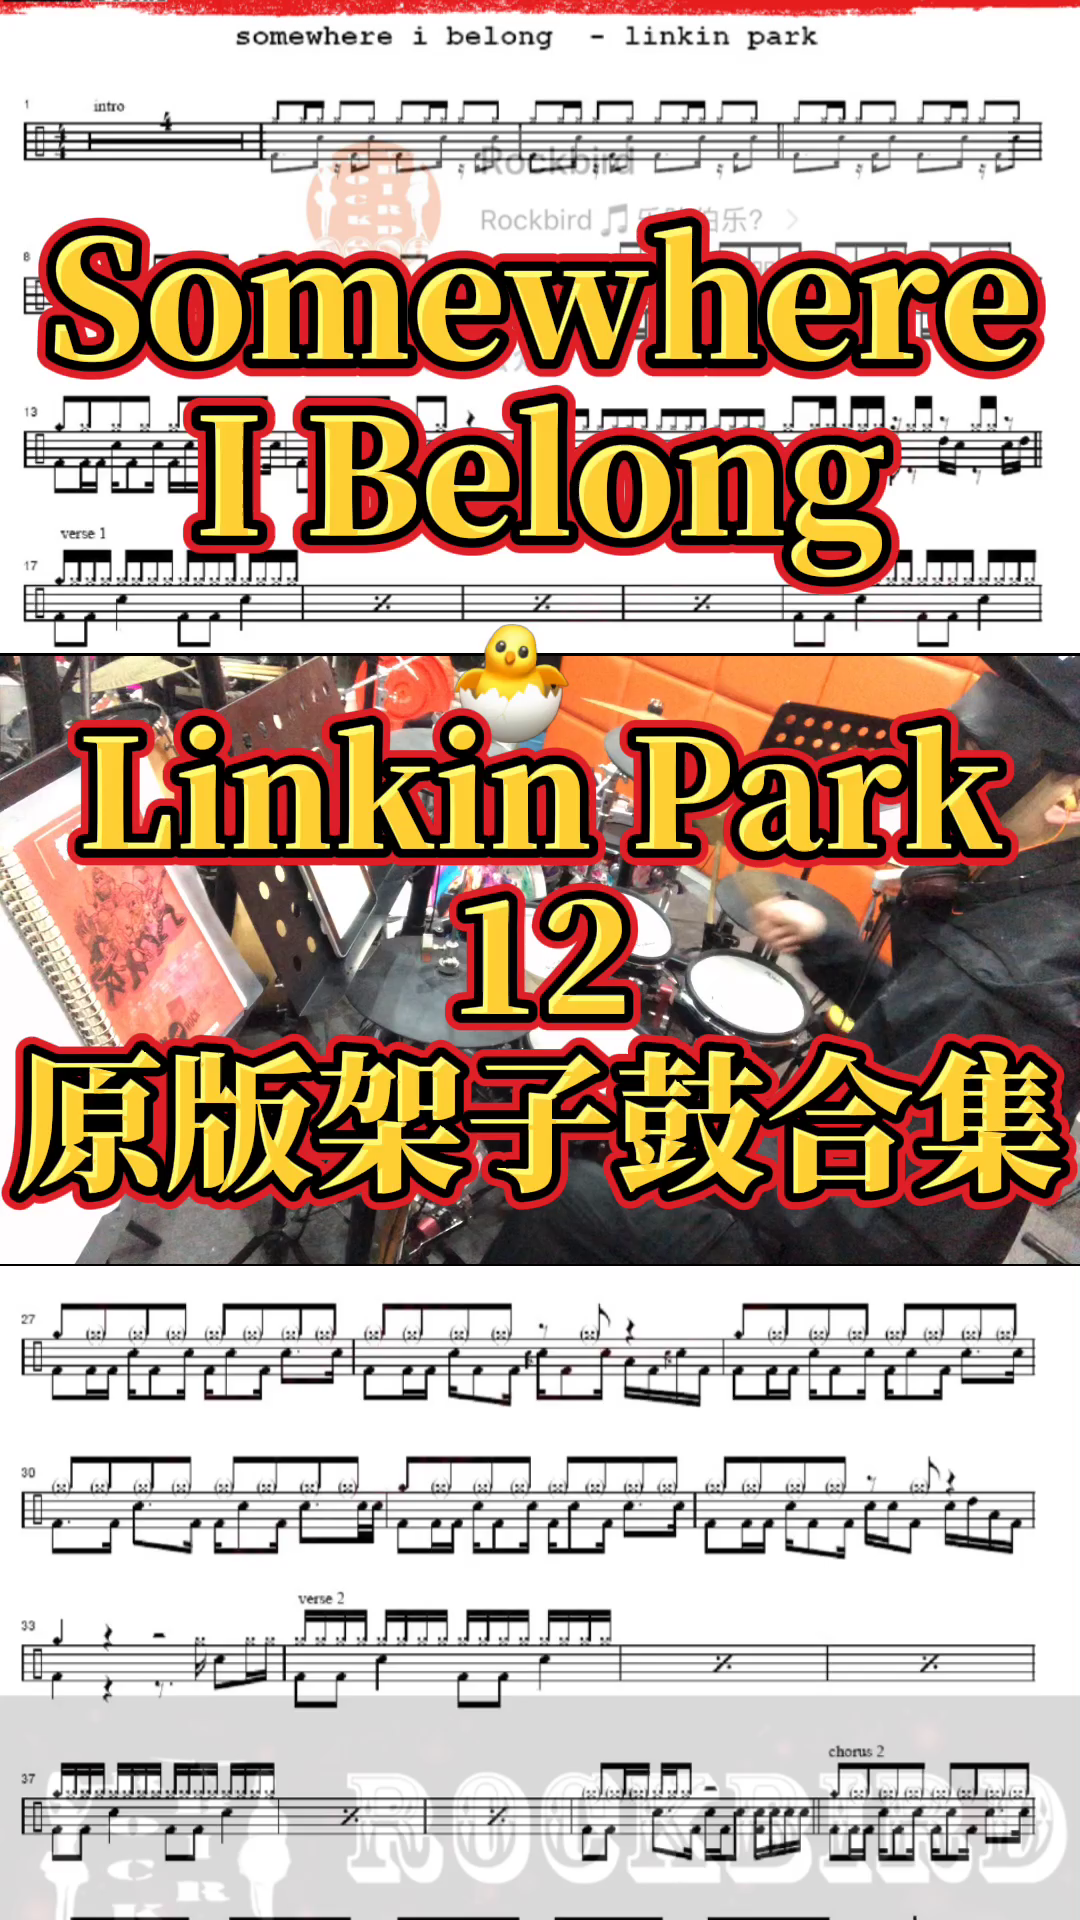 《Shadow Of The Day,钢琴谱》钢琴版，Linkin Park,林肯公园-Linkin Park|弹琴吧|钢琴谱|吉他谱|钢琴曲|乐谱|五线谱|高清免费下载|蛐蛐钢琴网